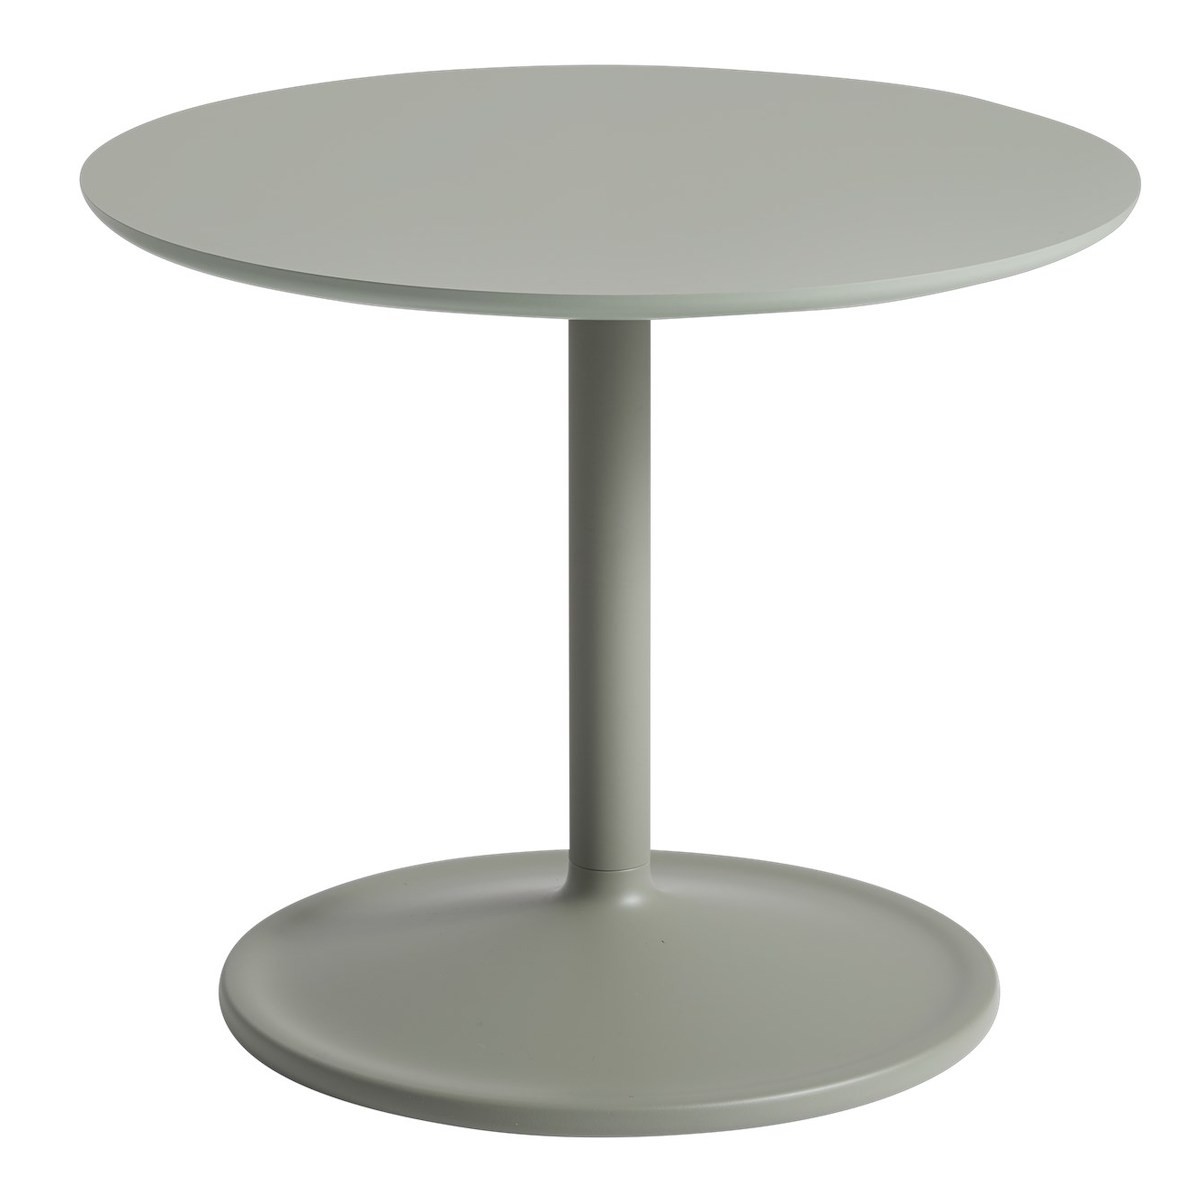 Dusty green - Ø48cm, H40cm - Soft side table